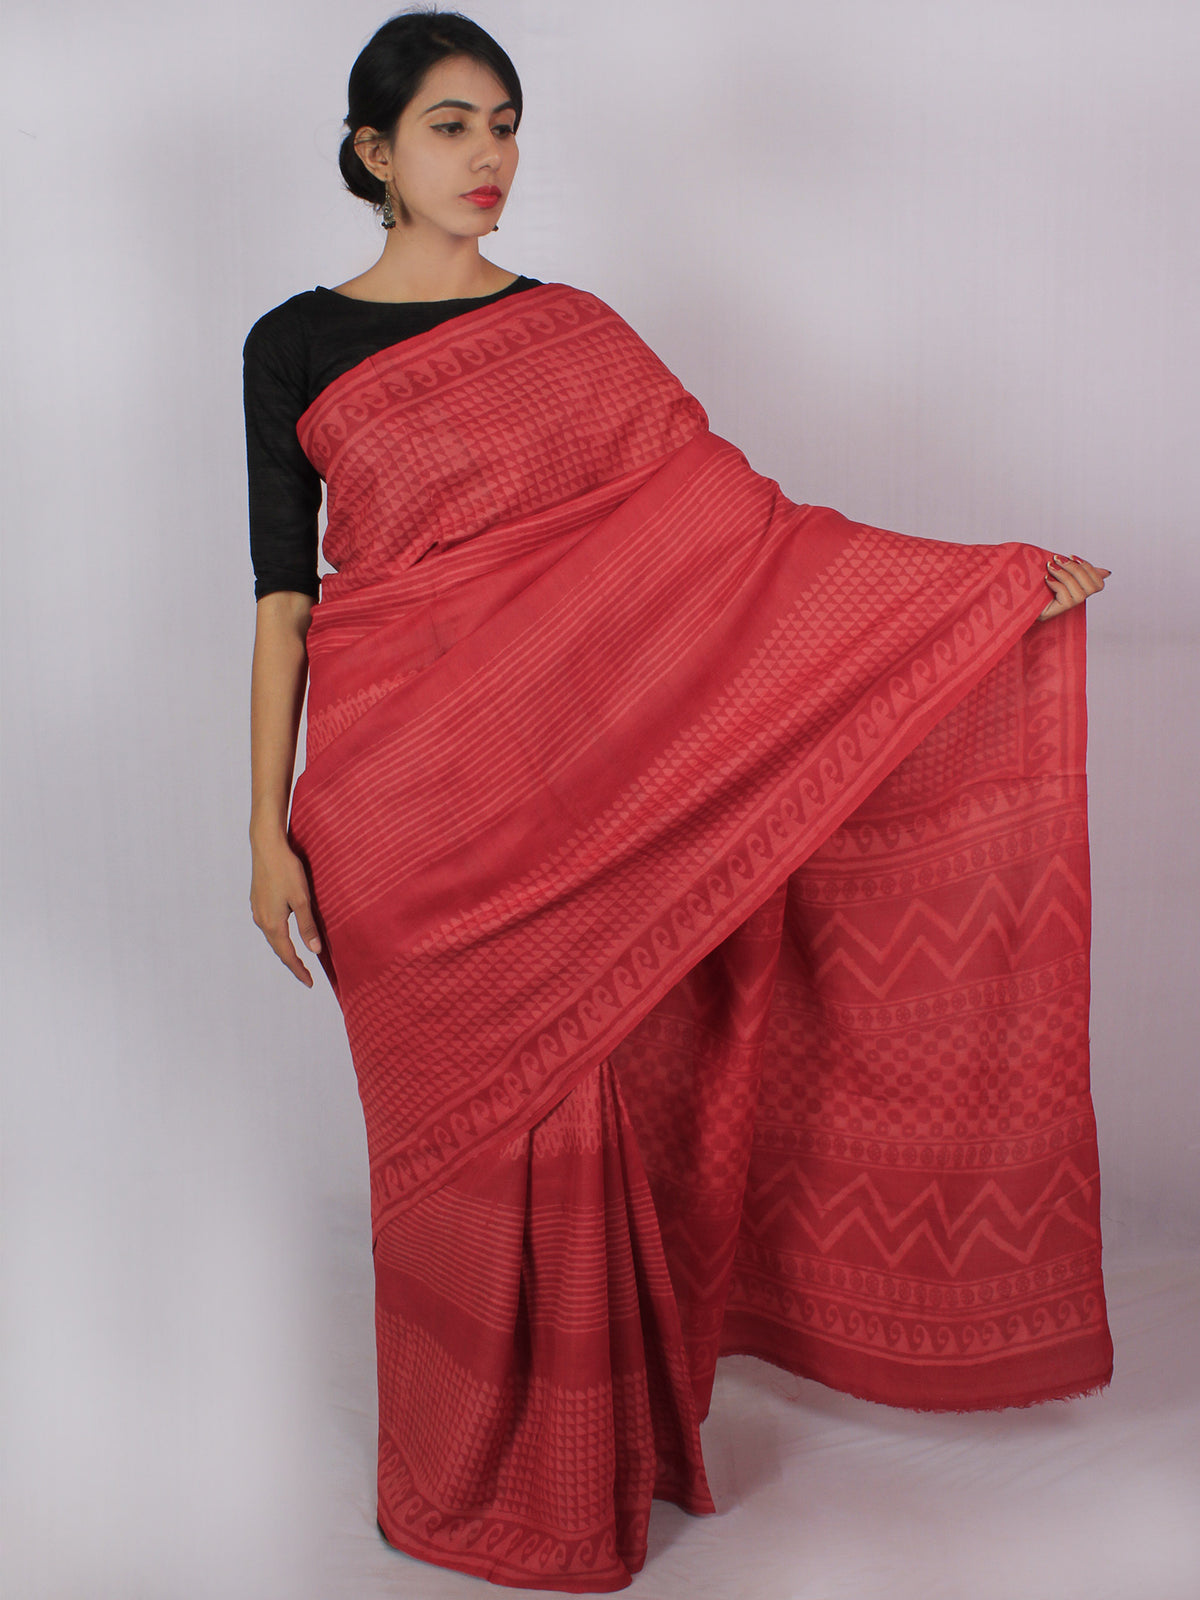 Tussar Handloom Silk Hand Block Printed Saree in Light Vermilion Red - S031701208